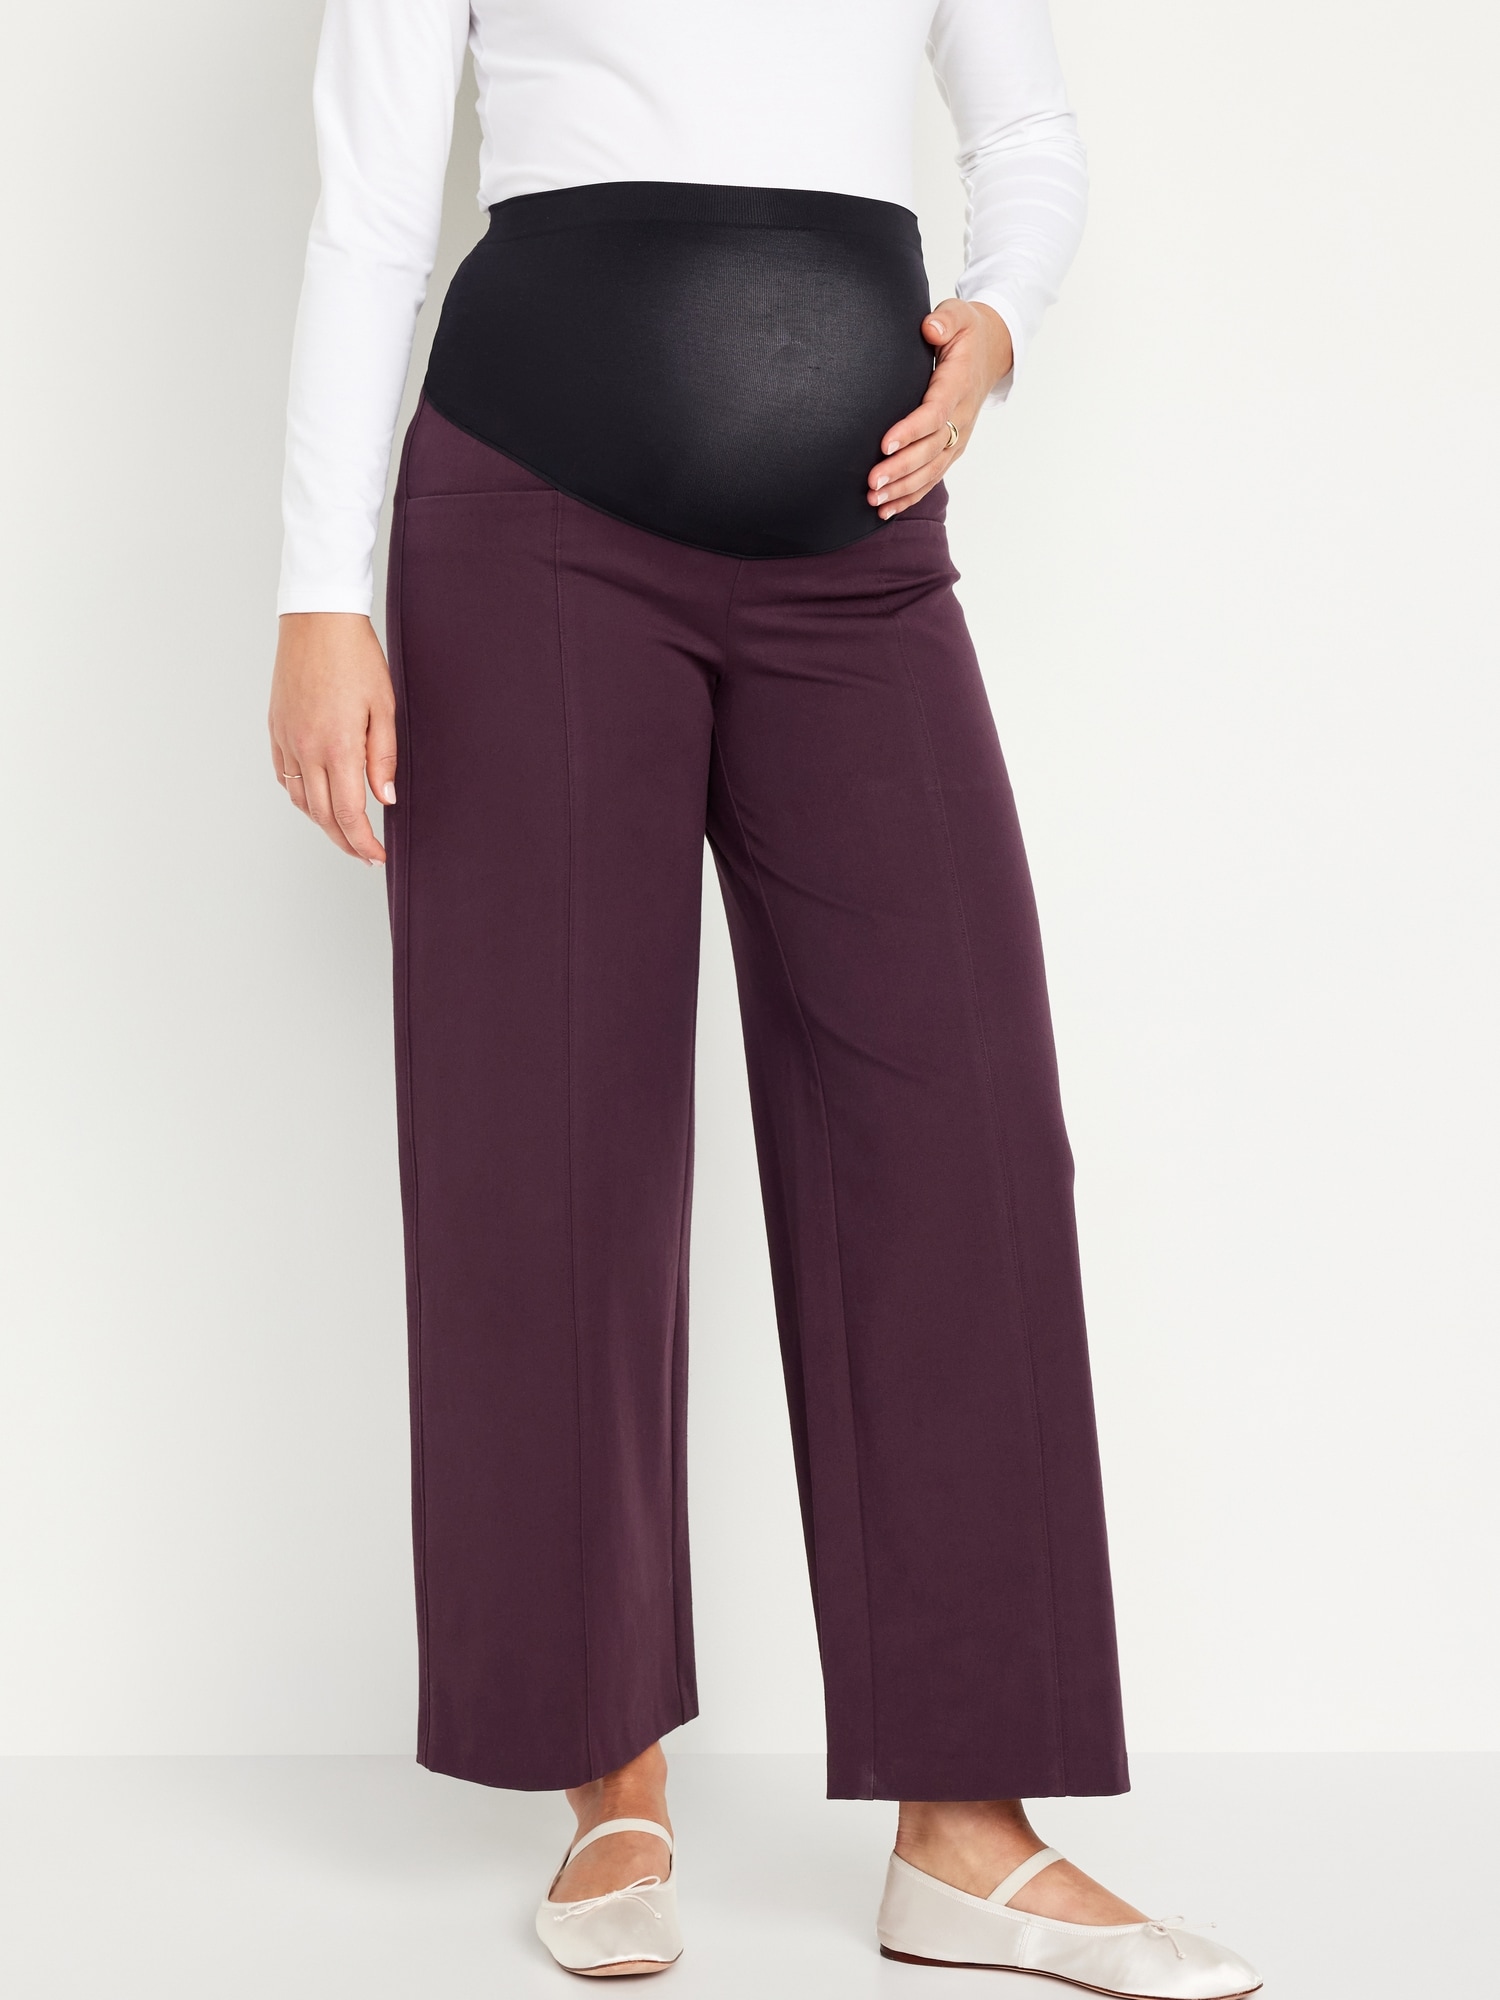  Tall Maternity Pants